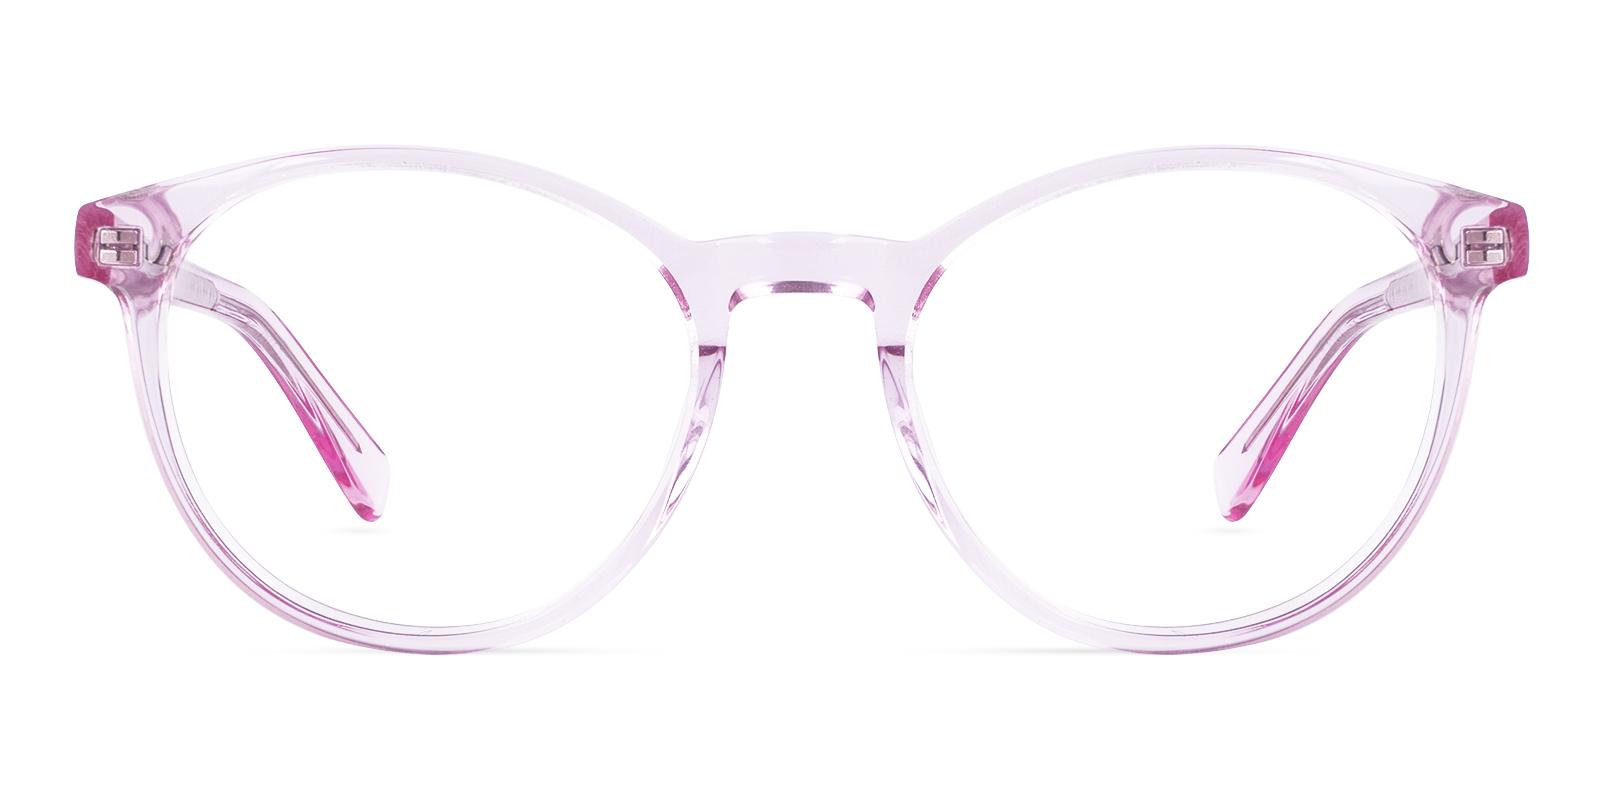 Fascproof Pink Acetate Eyeglasses , SpringHinges , UniversalBridgeFit Frames from ABBE Glasses